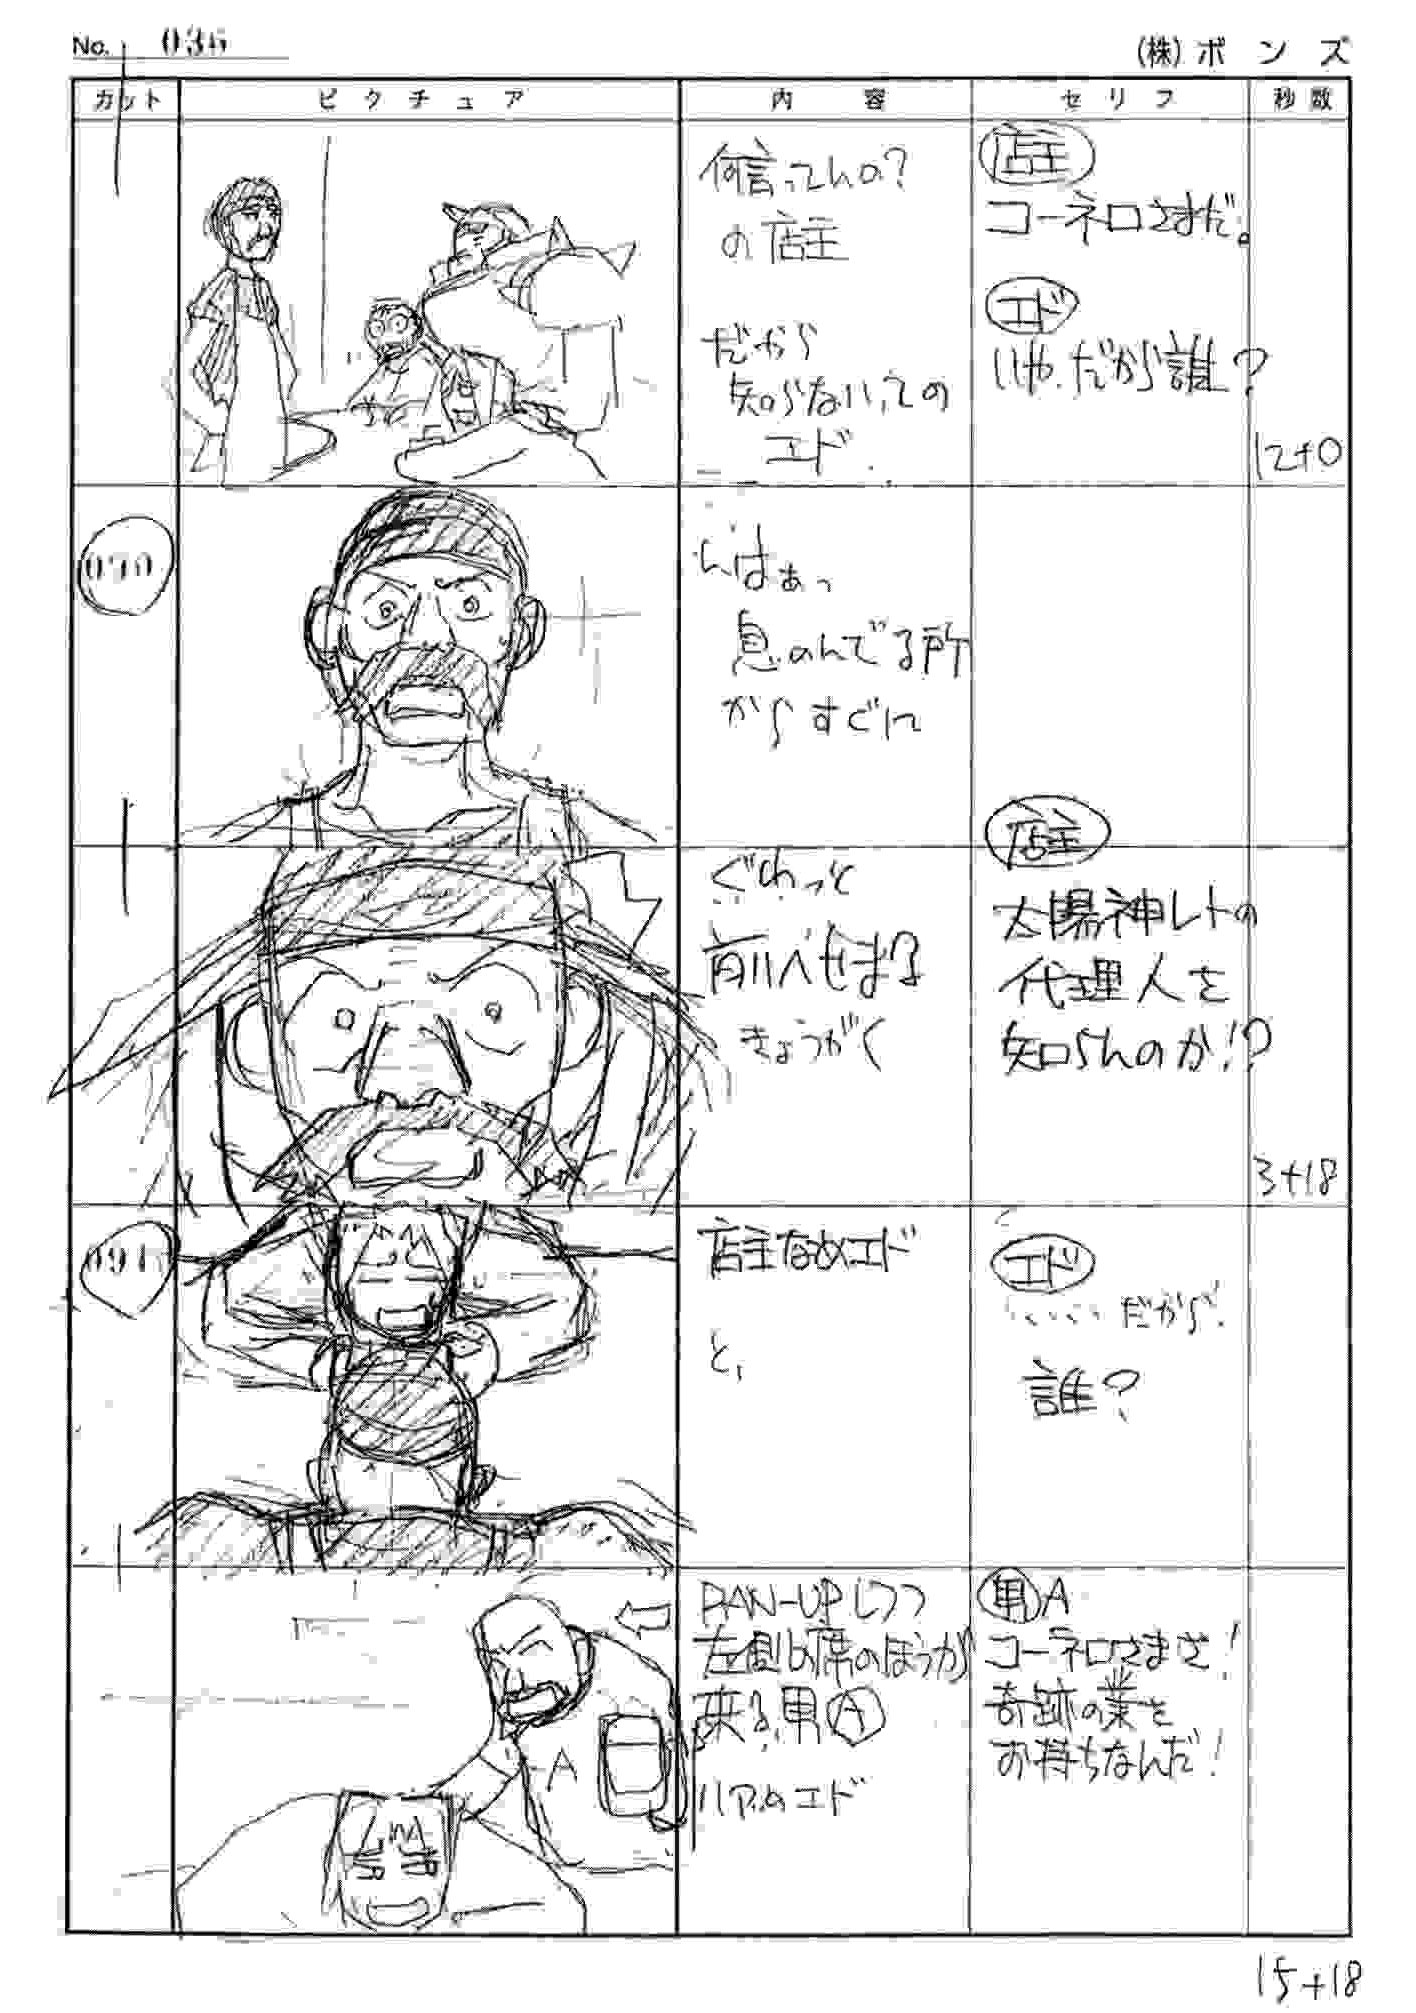 Une page du storyboard de la box collector de Fullmetal Alchemiist